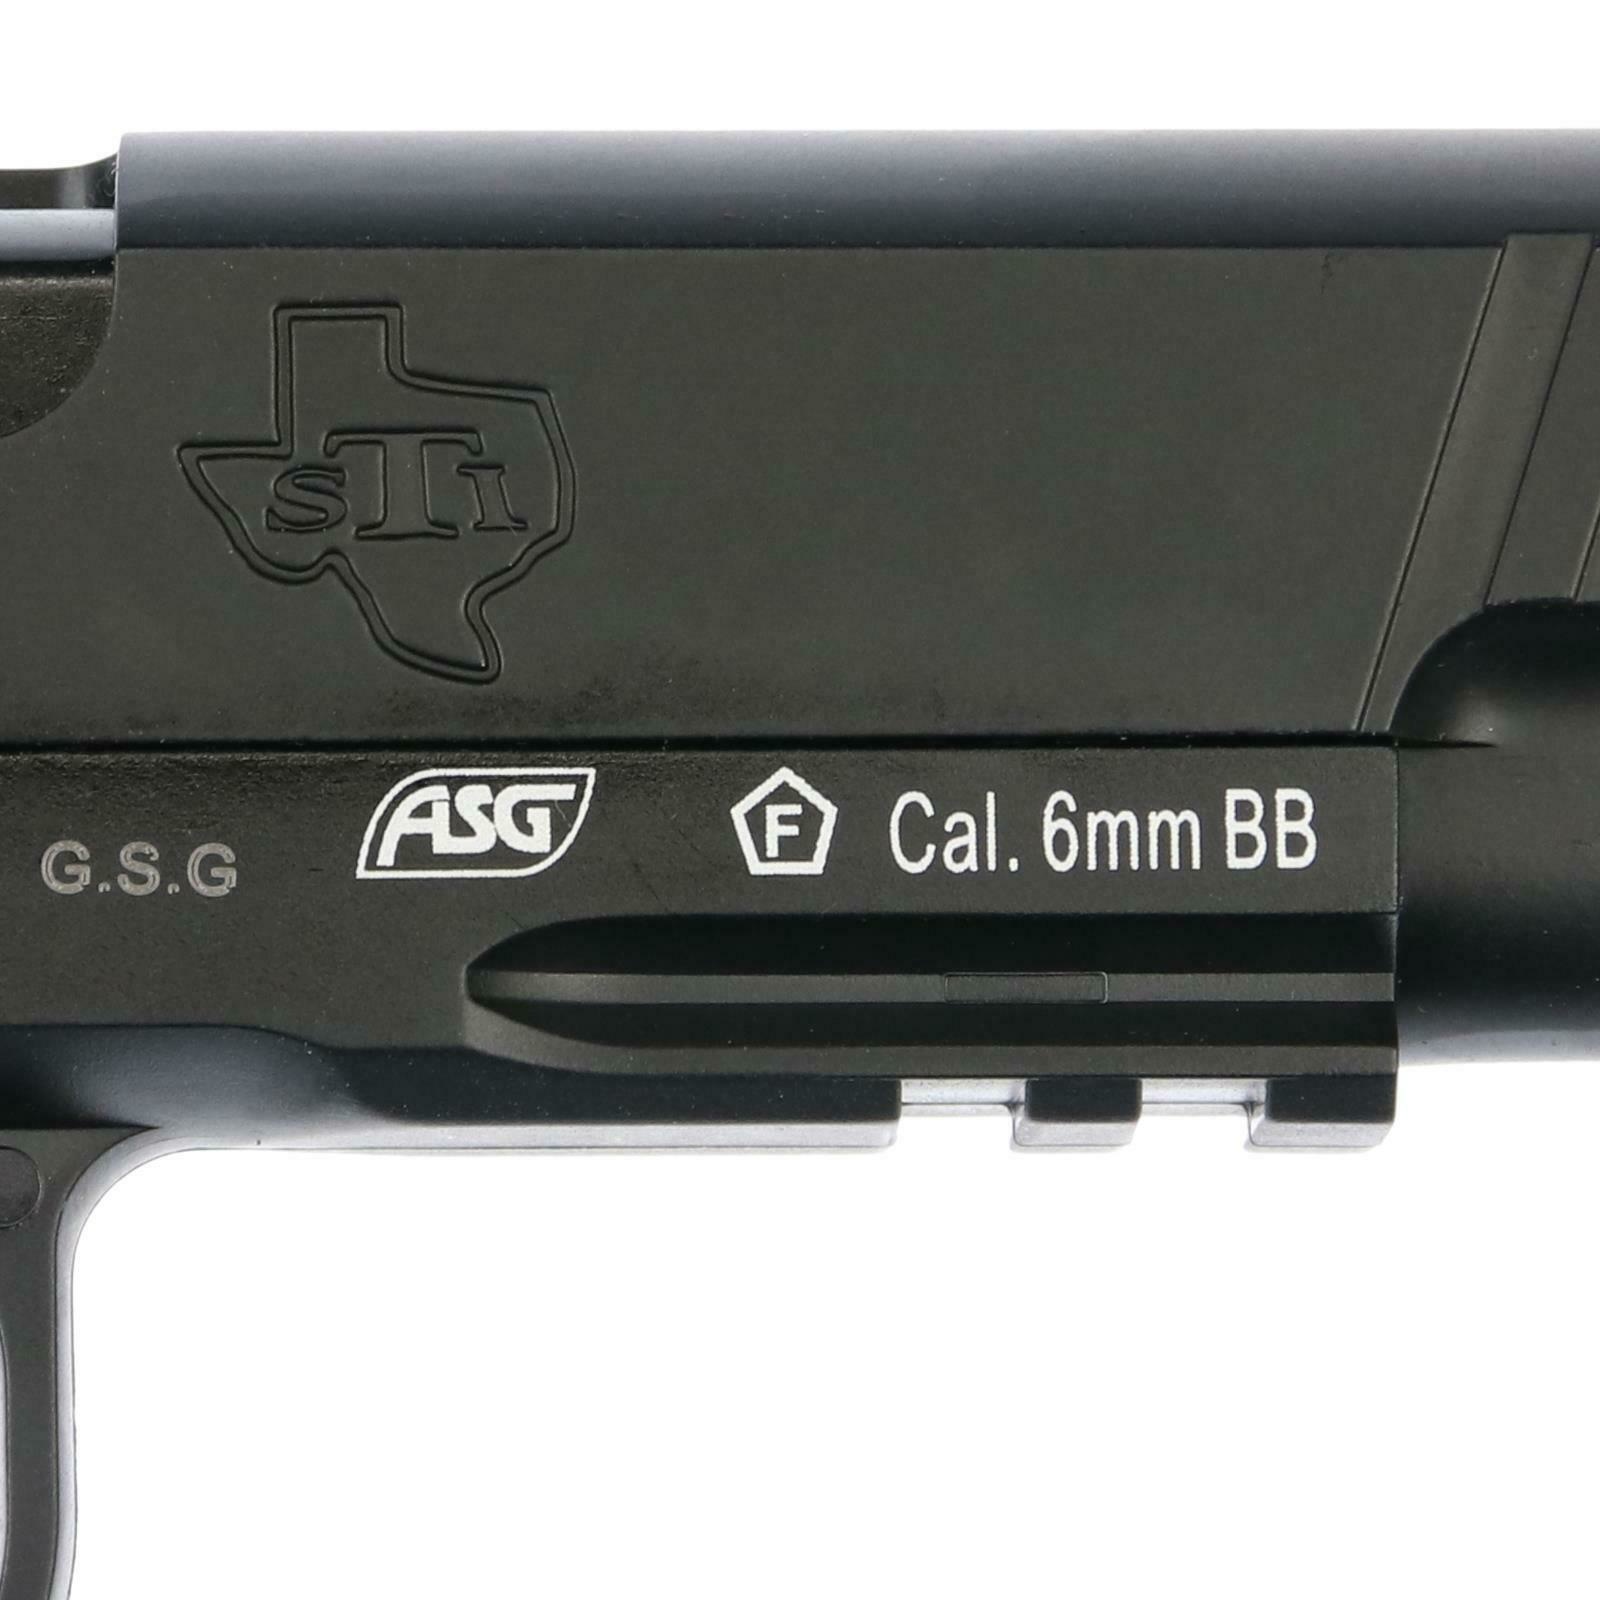 ASG STI Duty One 1911 Co2 6mm BB GBB 2.0 Joule - BK